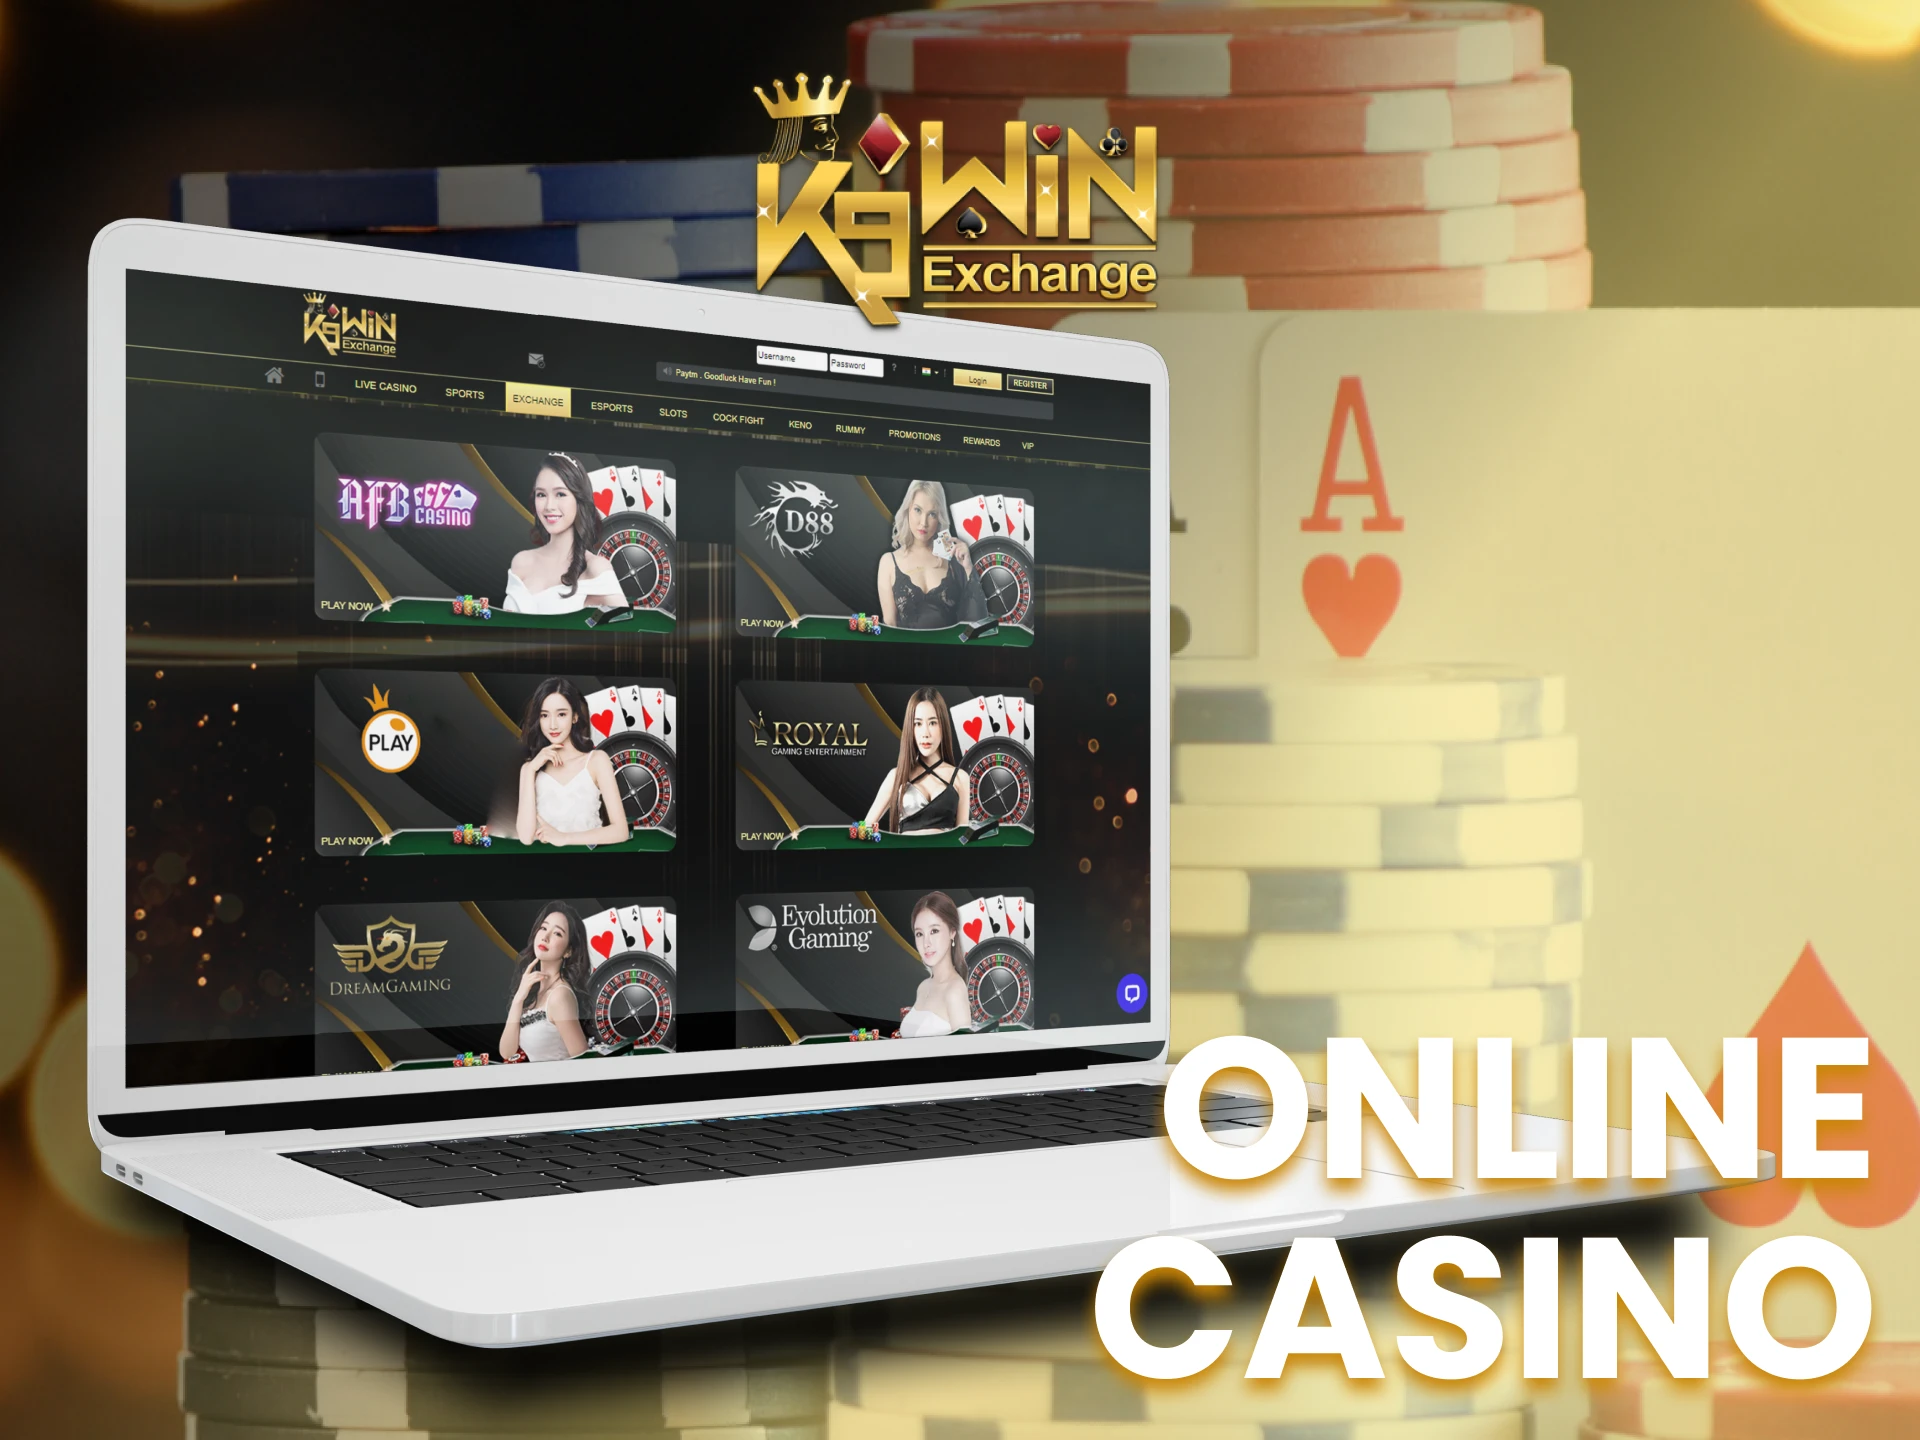 Play new casino games in K9Win online casino.